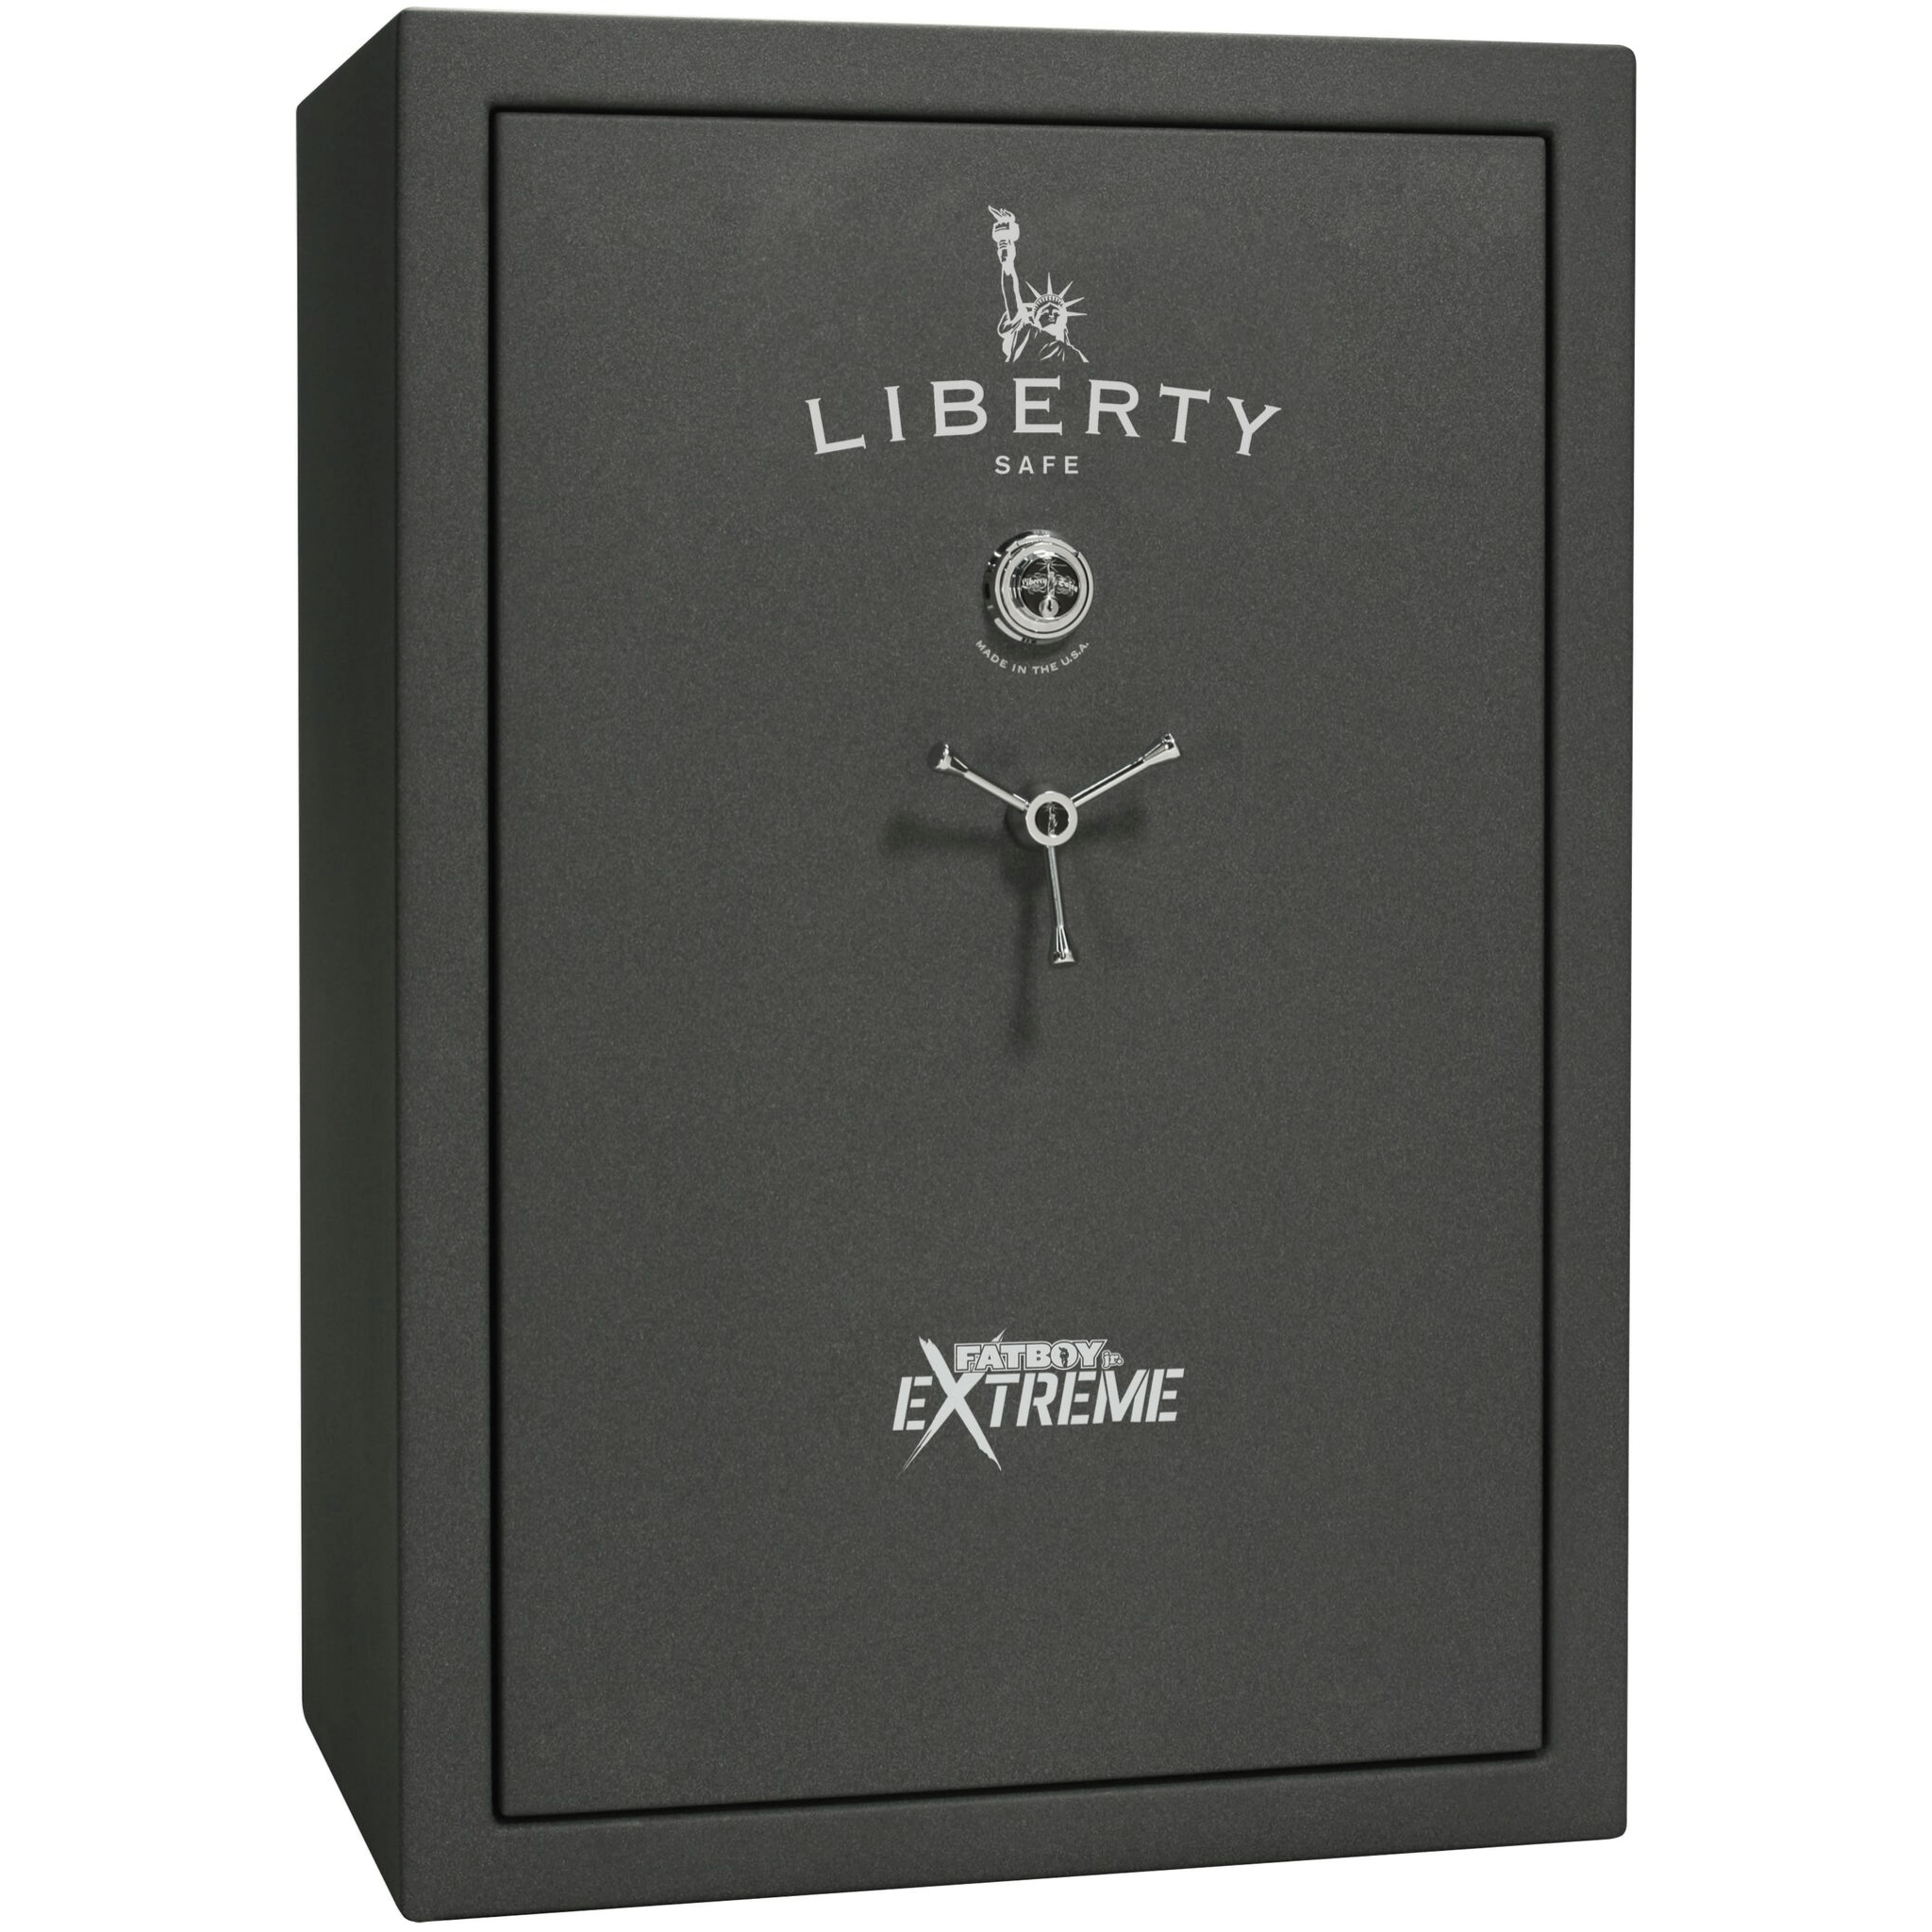 Liberty Fatboy Jr 48 Extreme Gun Safe with Mechanical Lock, image 1 